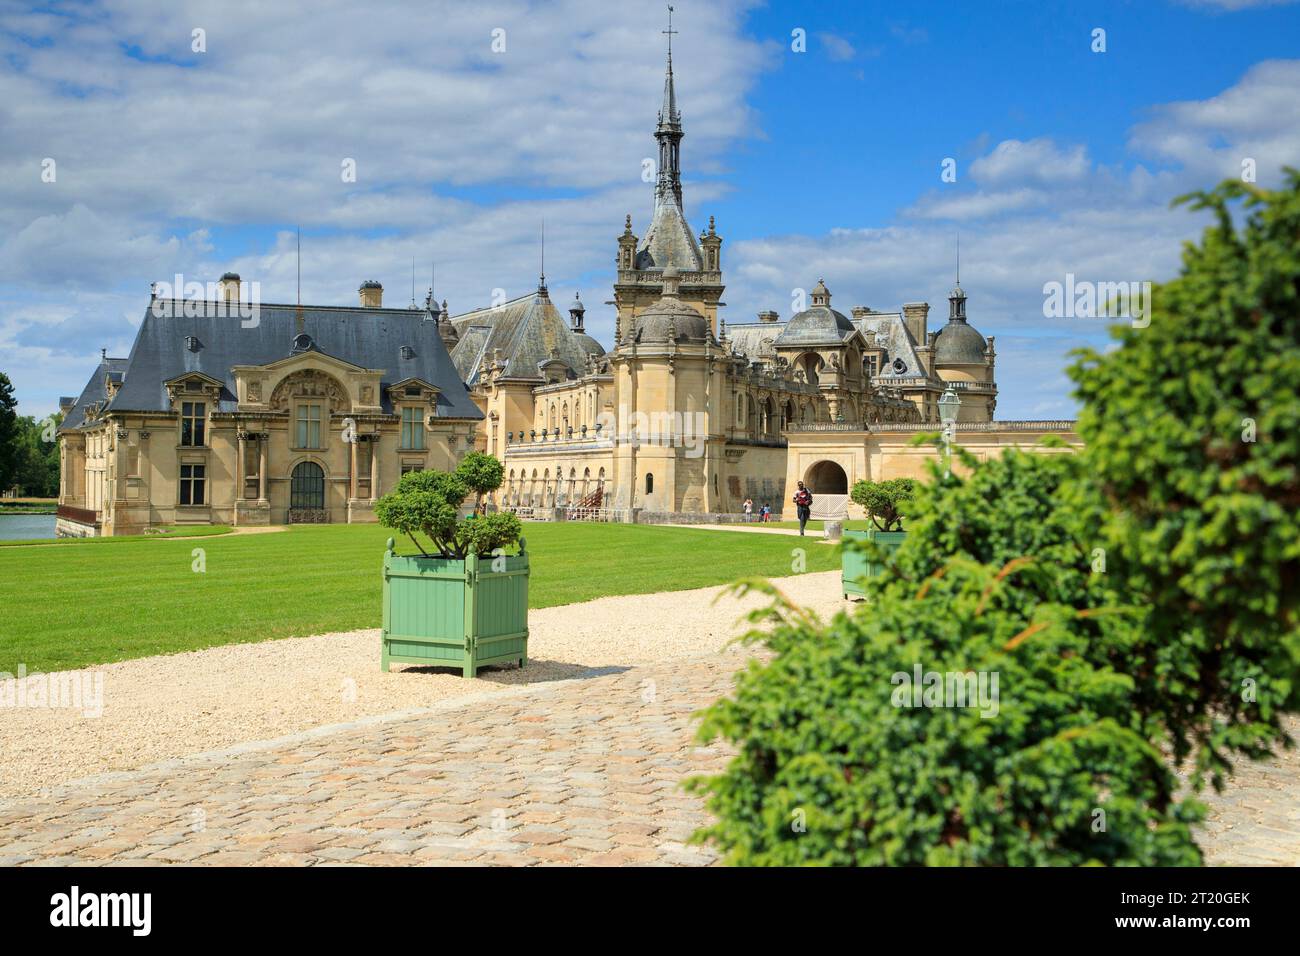 Chateau de Chantilly, castello registrato come National Historic Landmark (monumento storico francese) Foto Stock